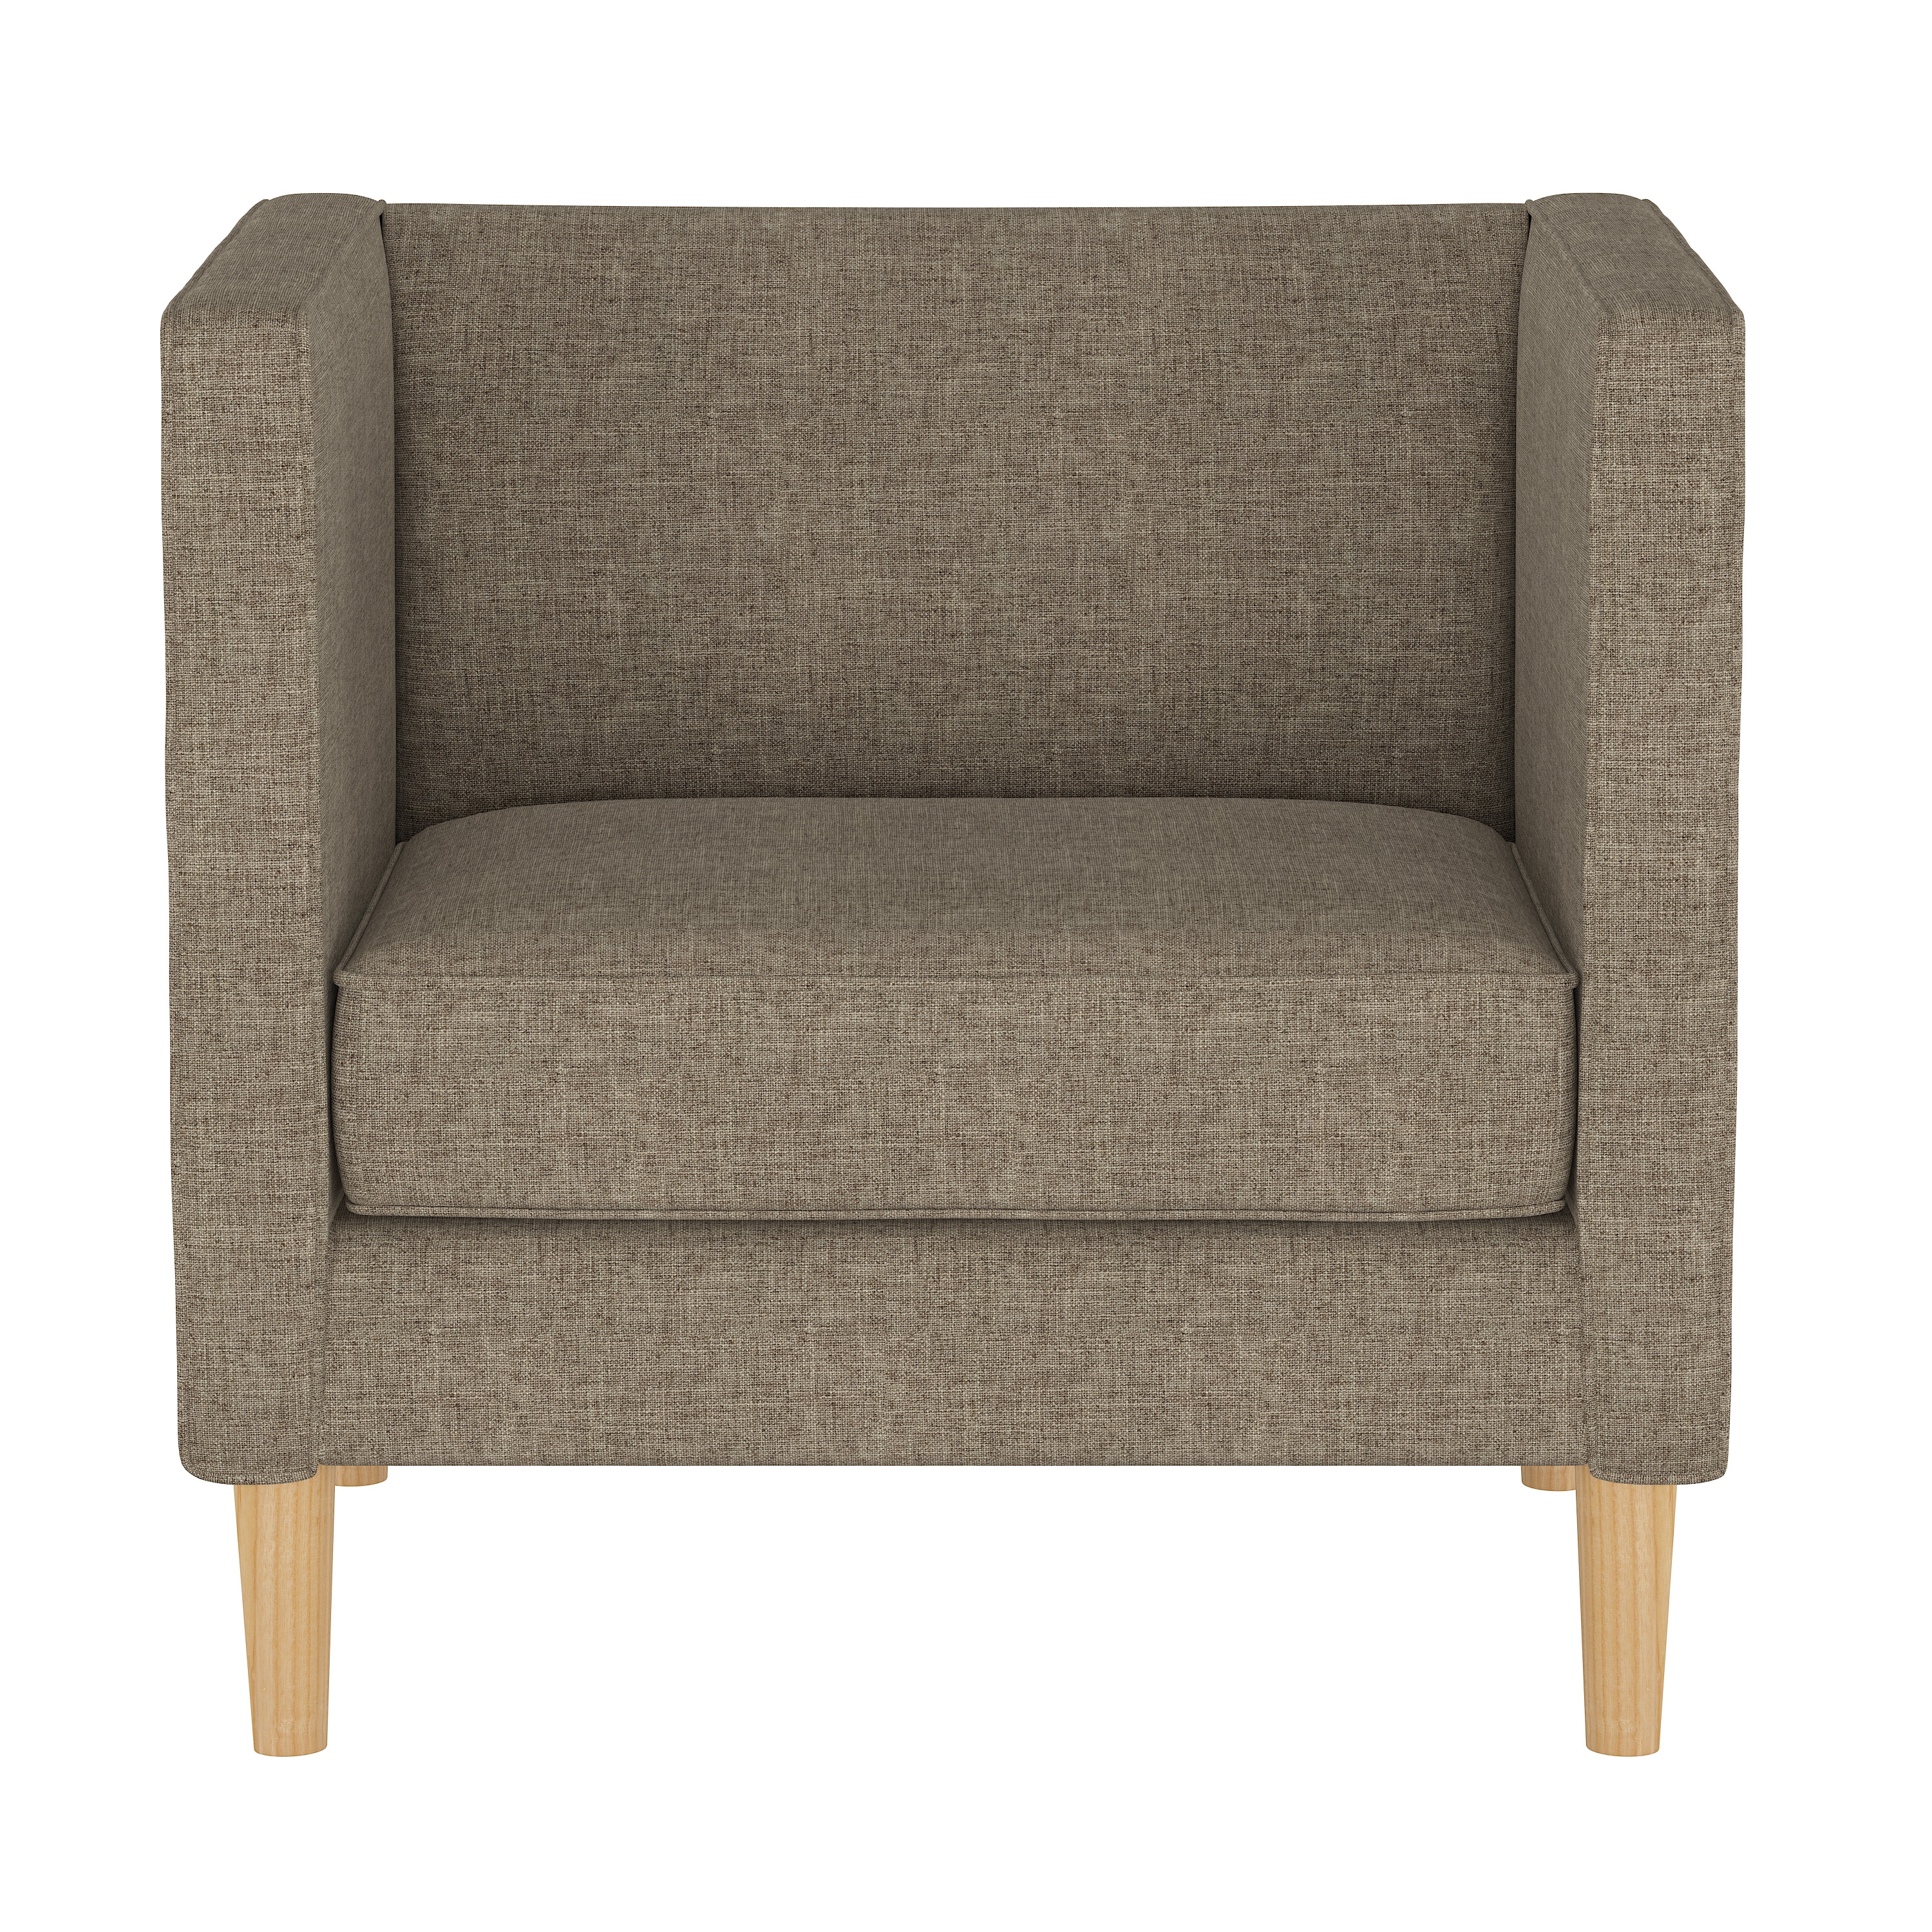 Humboldt Chair, Linen - Image 1